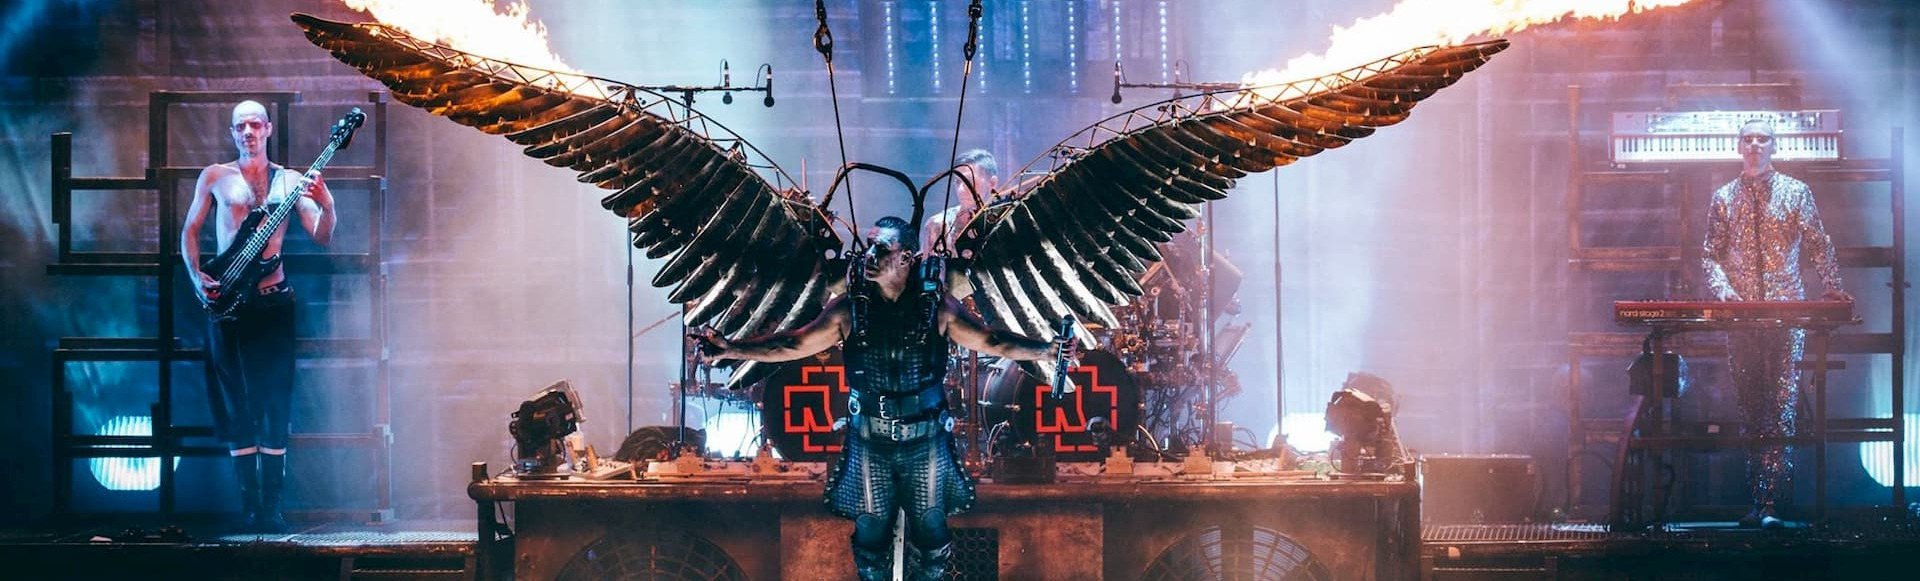 В Петербурге скупают билеты на концерт Rammstein